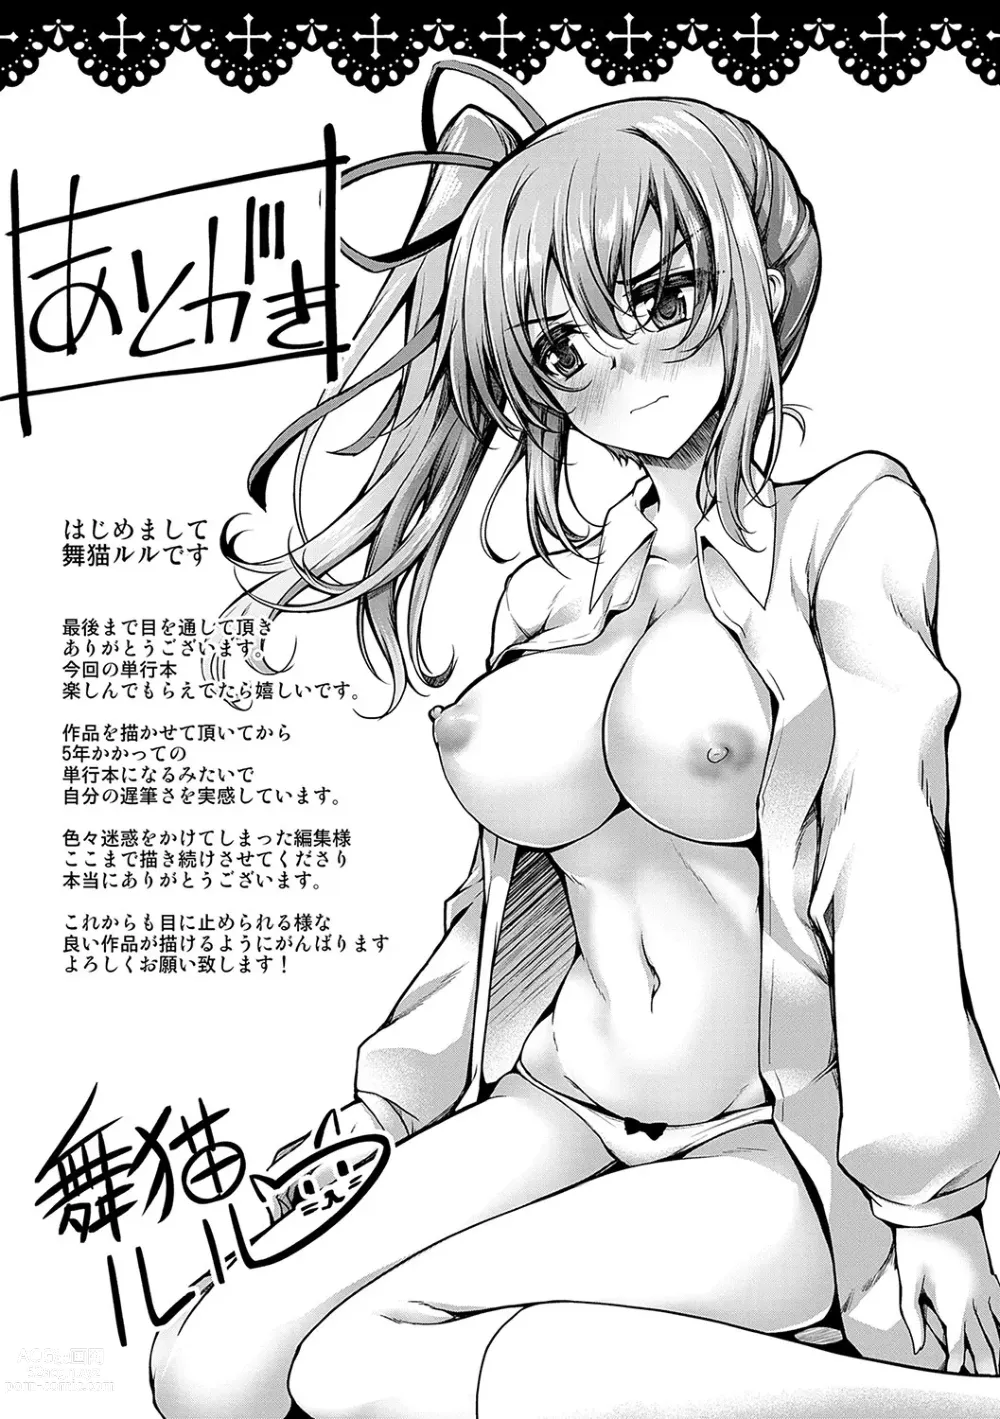 Page 226 of manga Koibana Fubuki